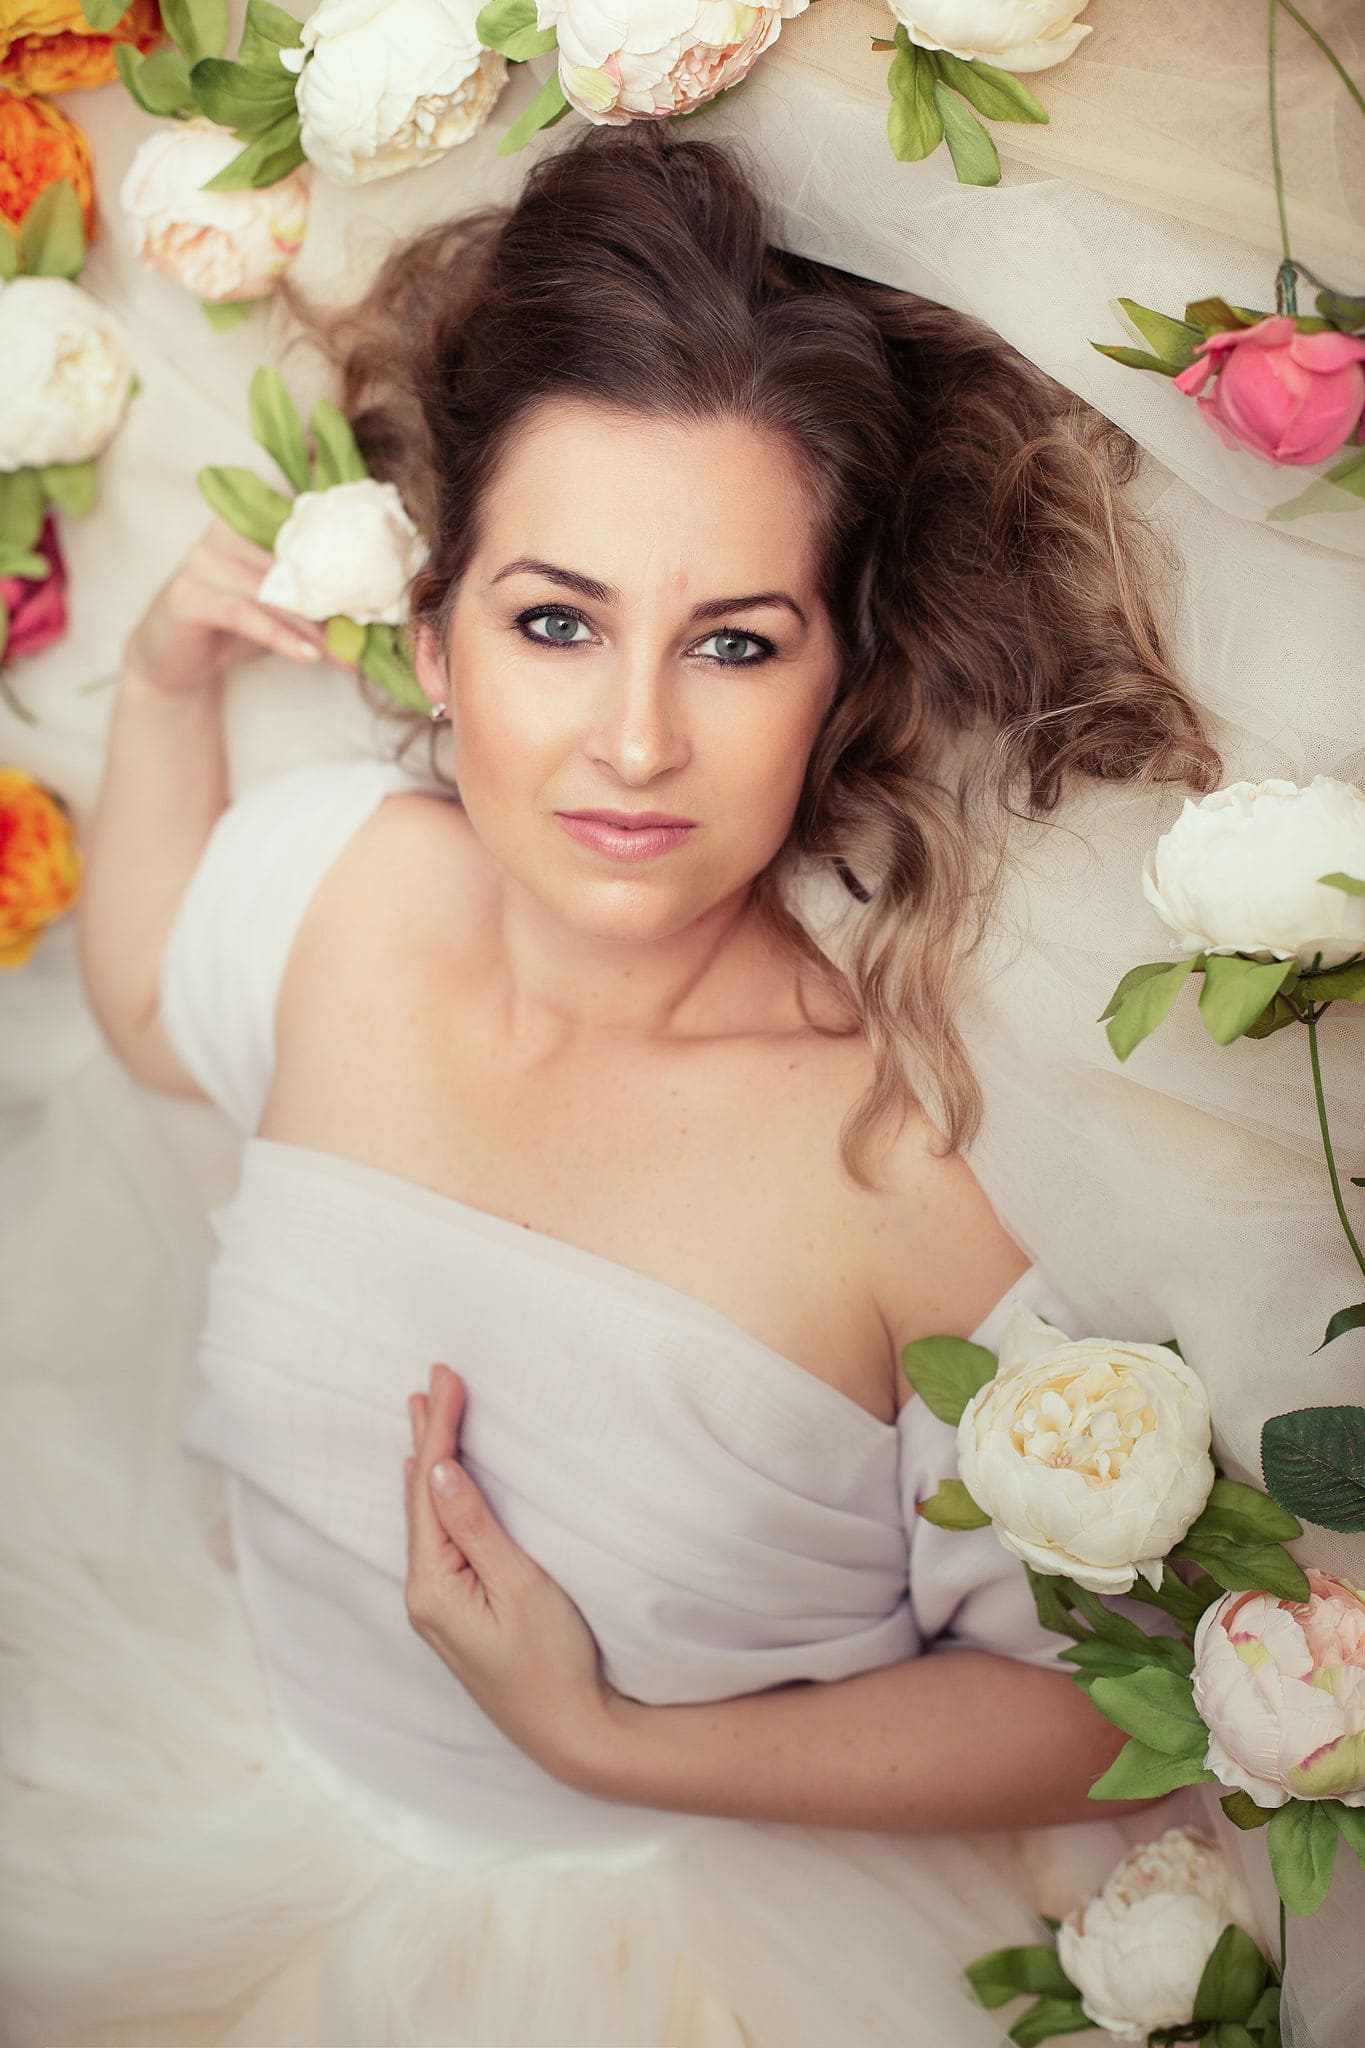 Elegant boudoir photo with flowers